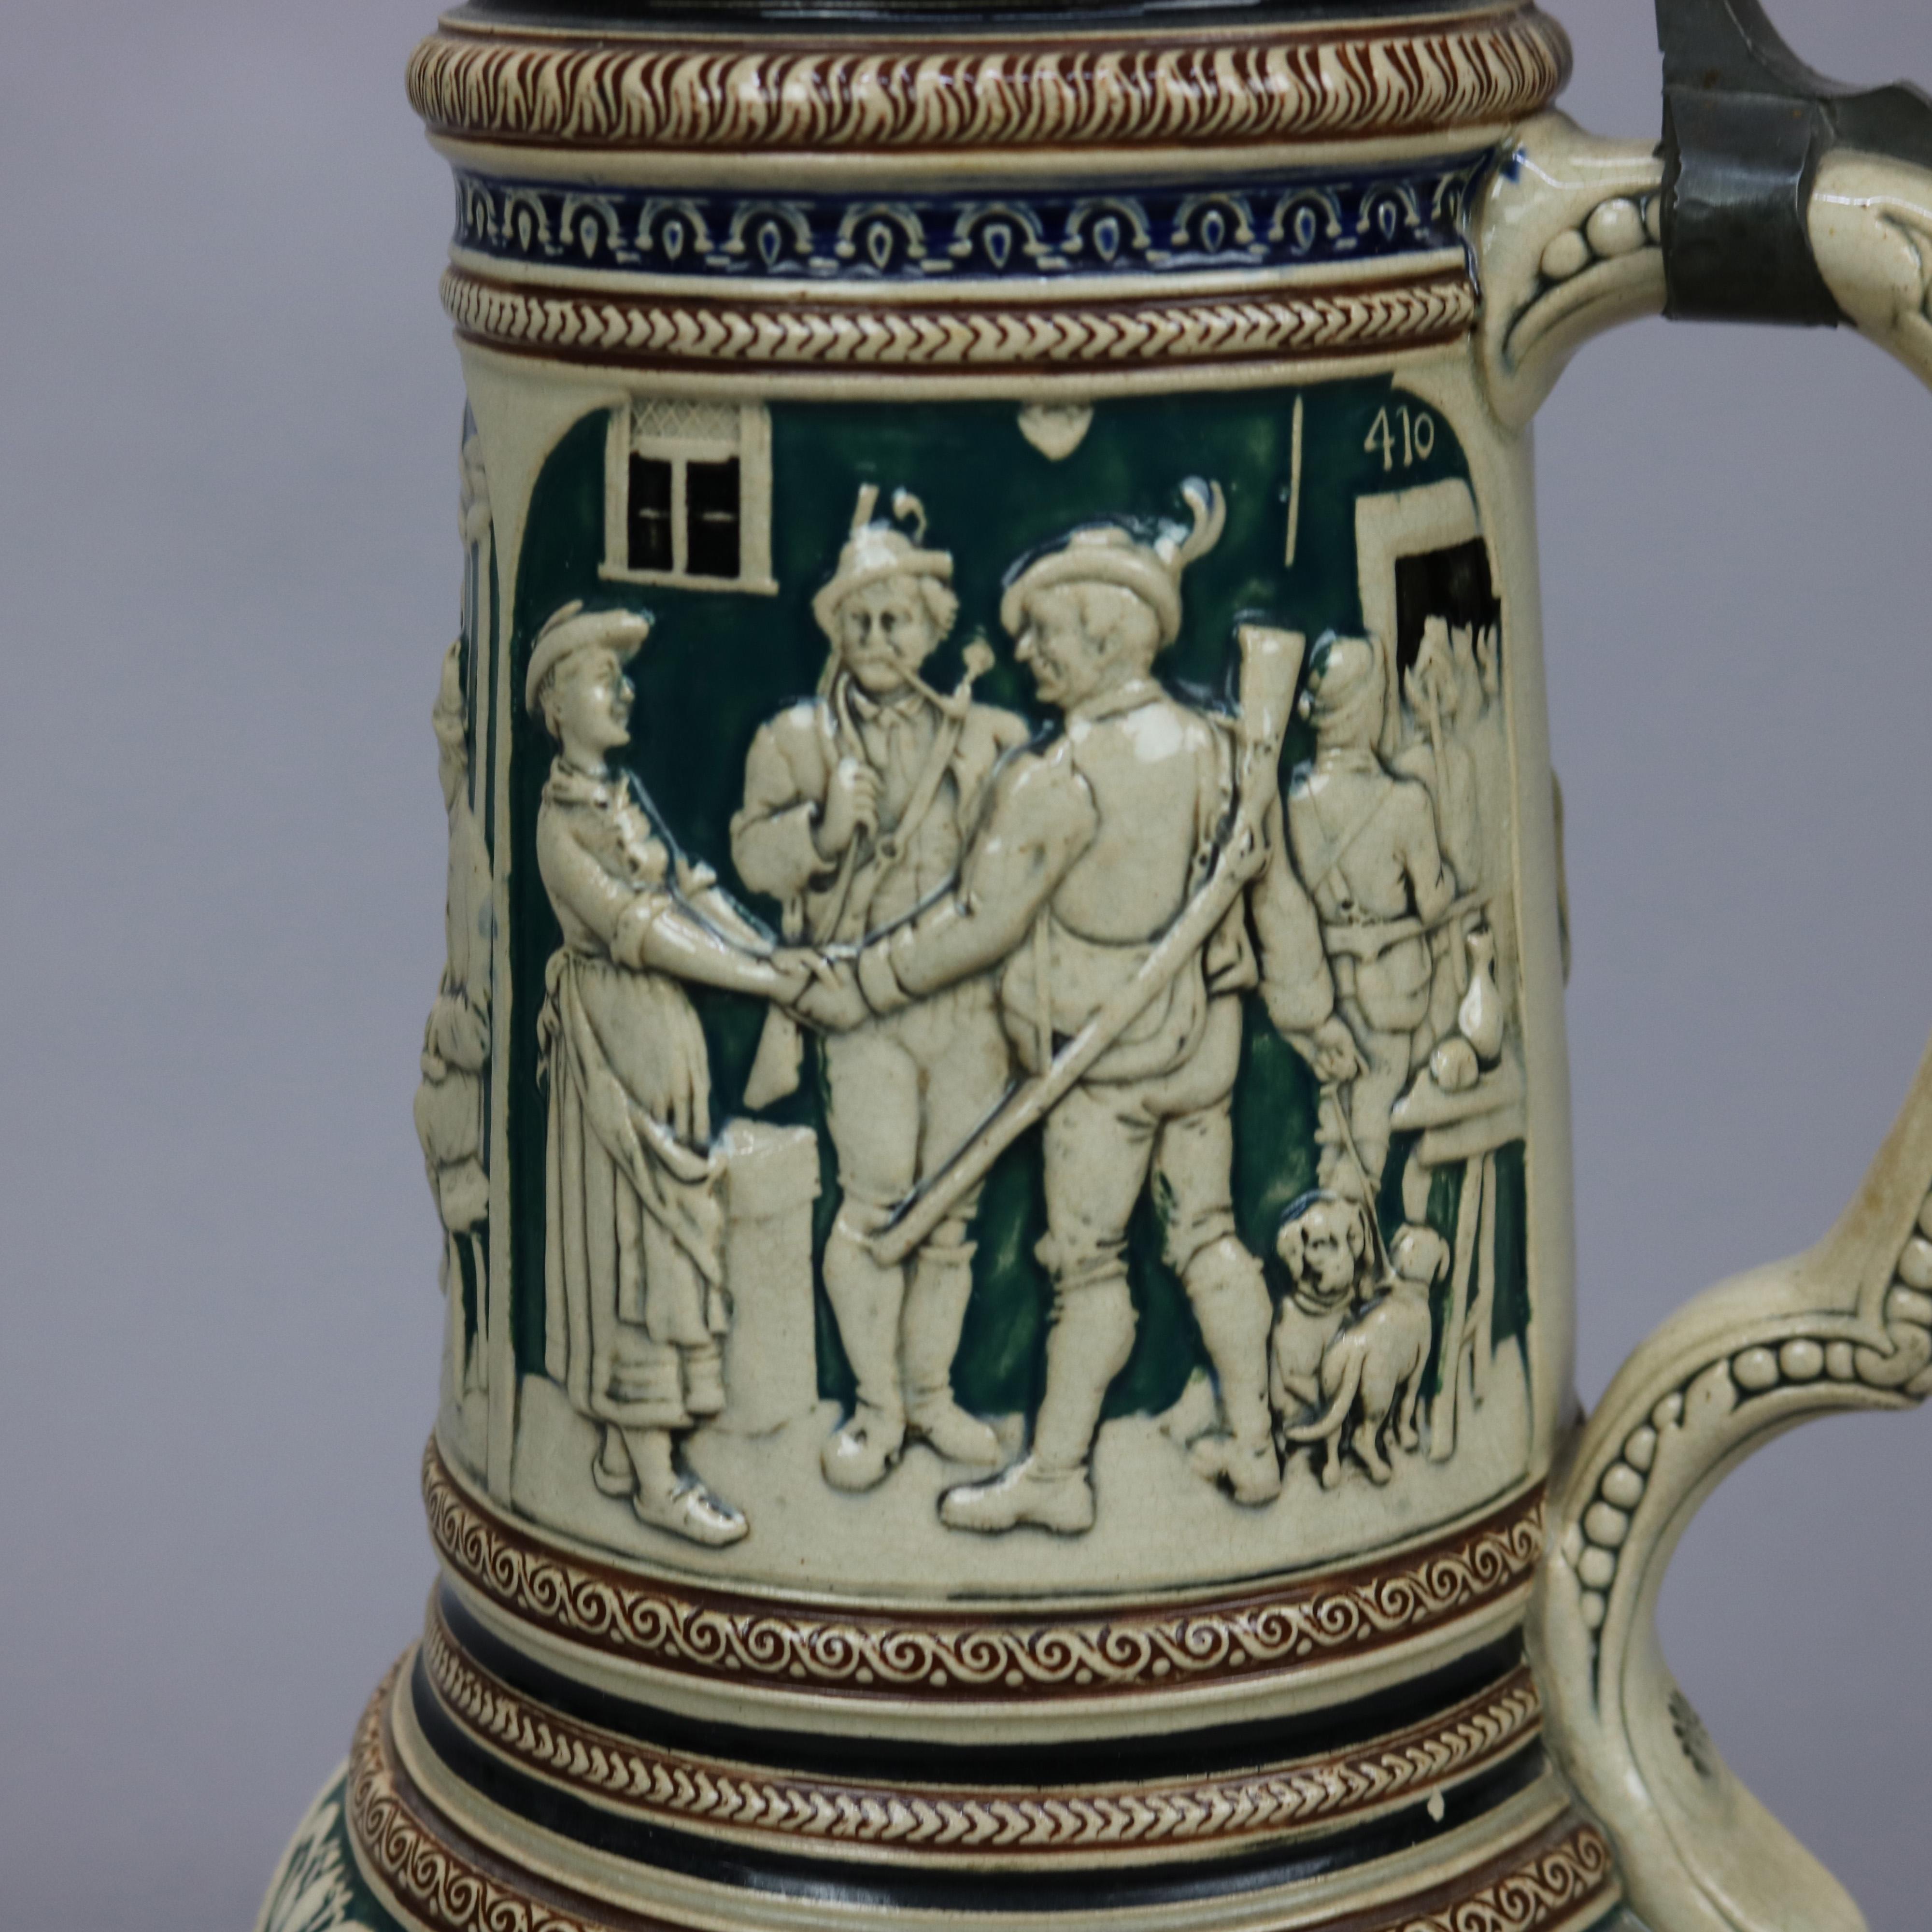 Pottery Antique Large German Stoneware Beer Stein, Genre Scene in Relief, c1900